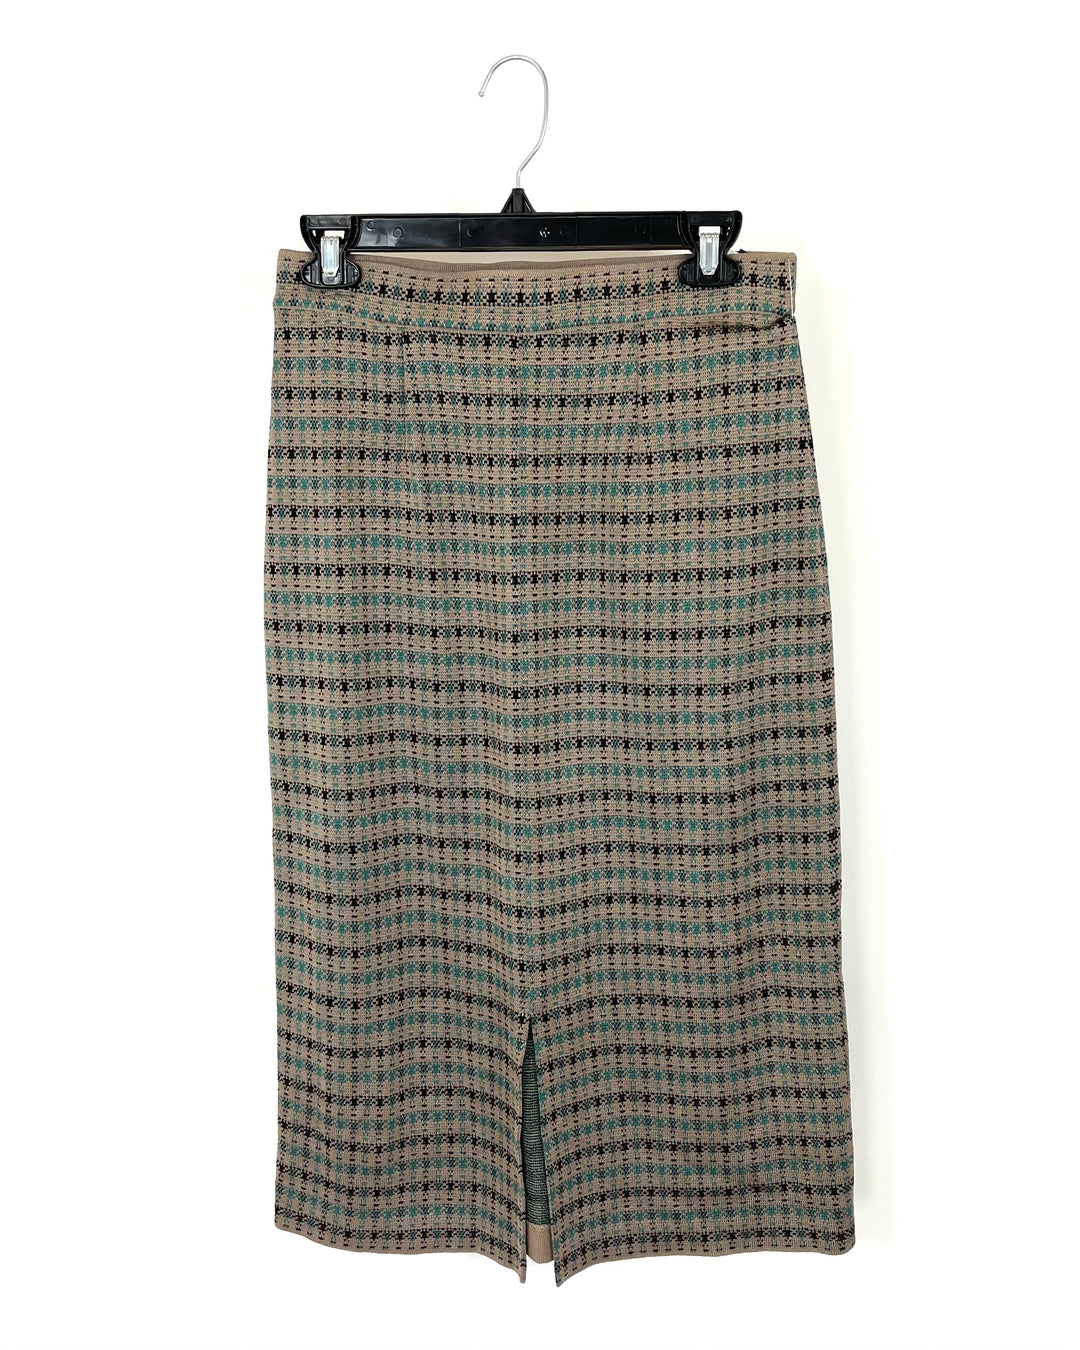 Brown Skirt - Size 2-4